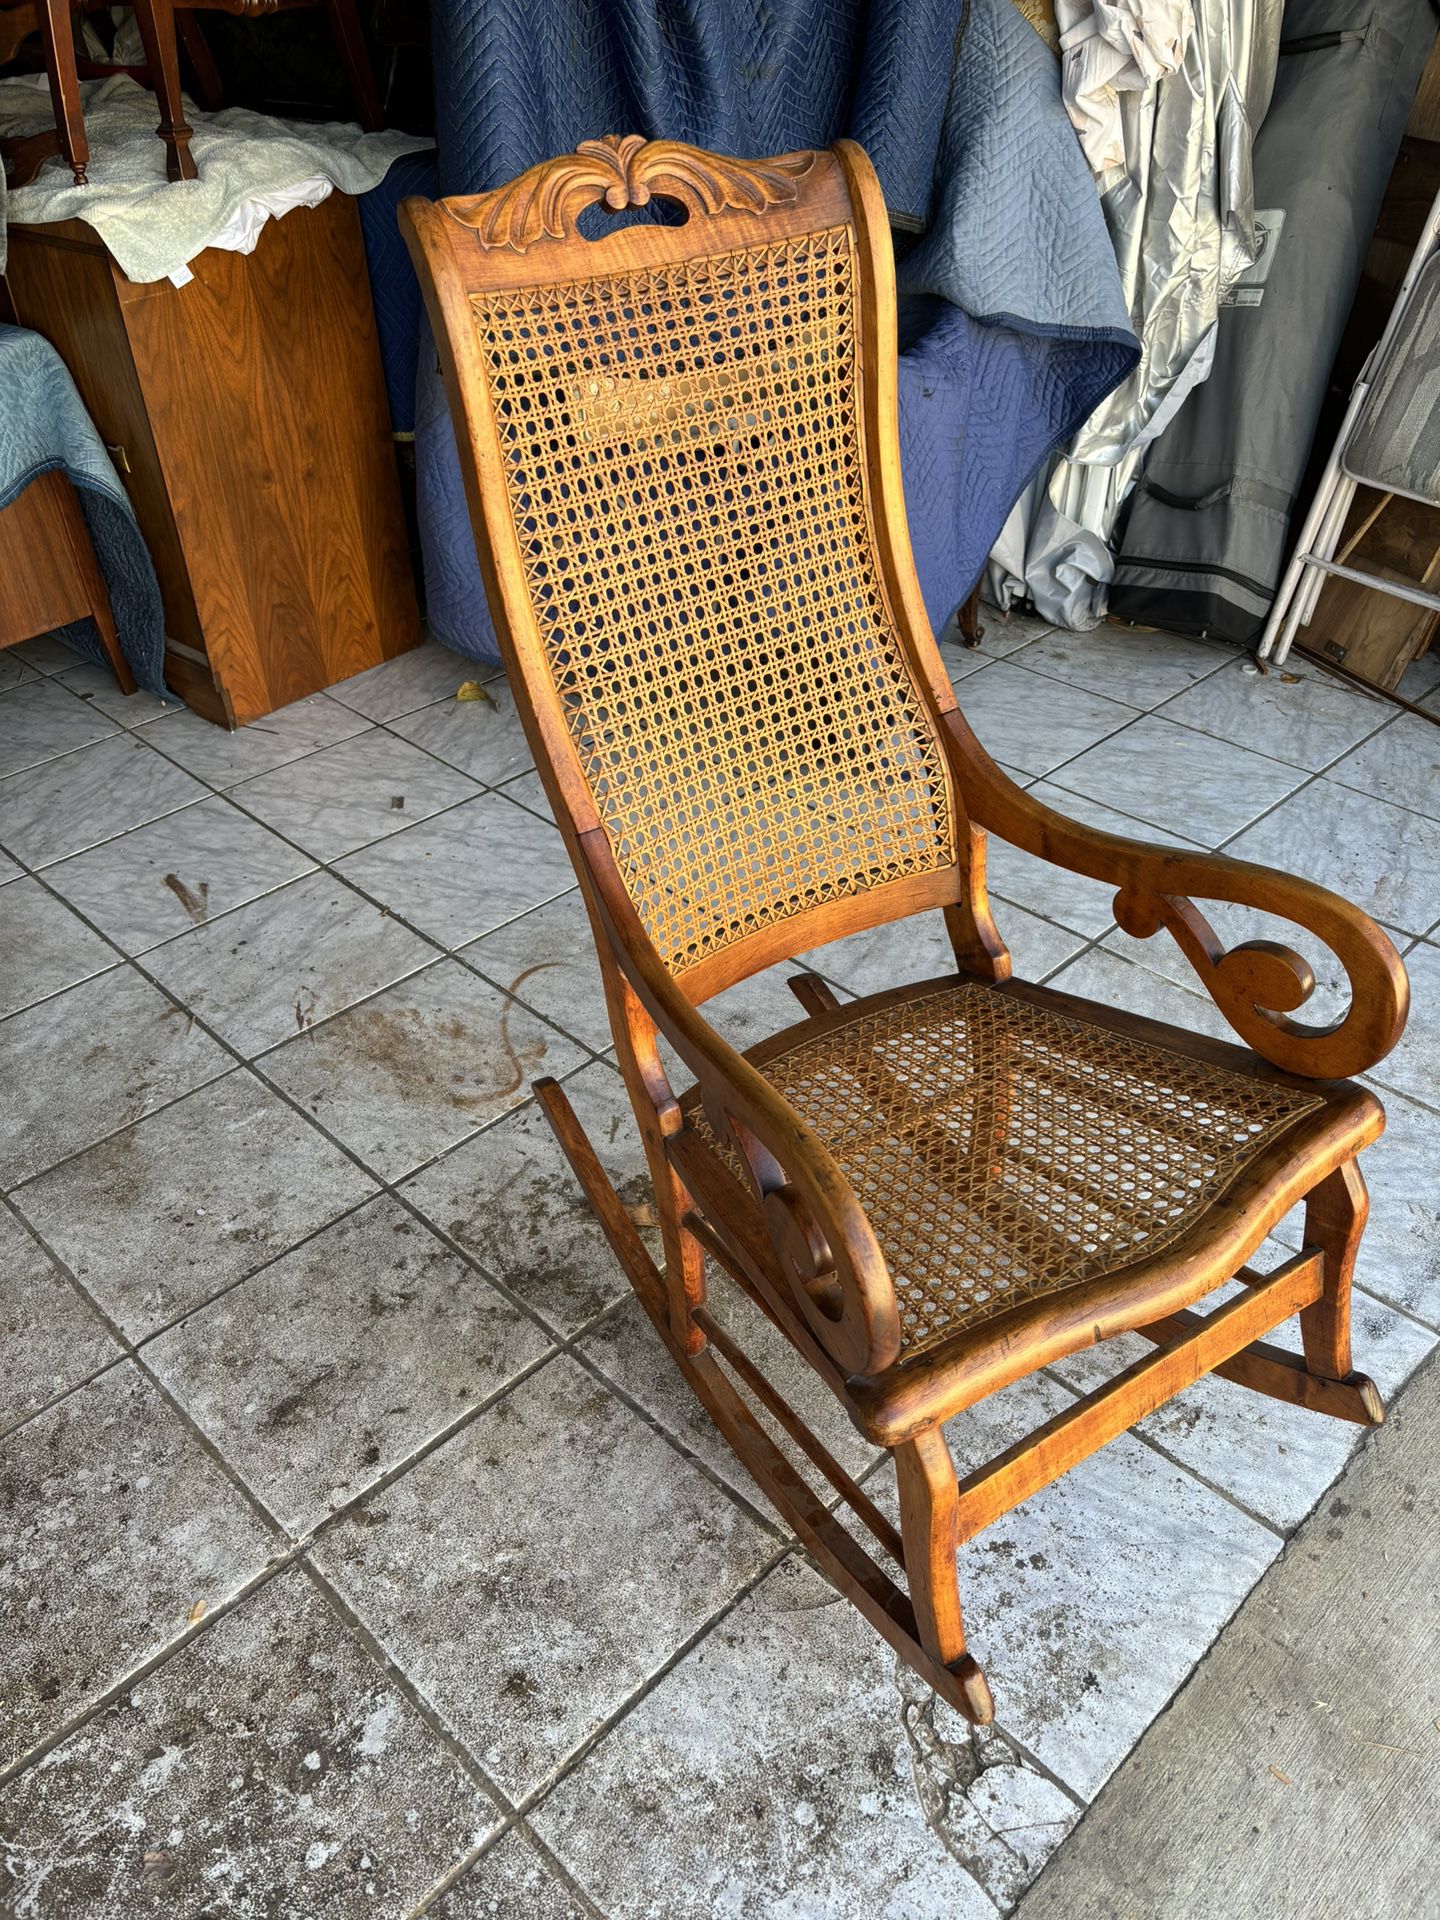 Antique Rocking Chair. 